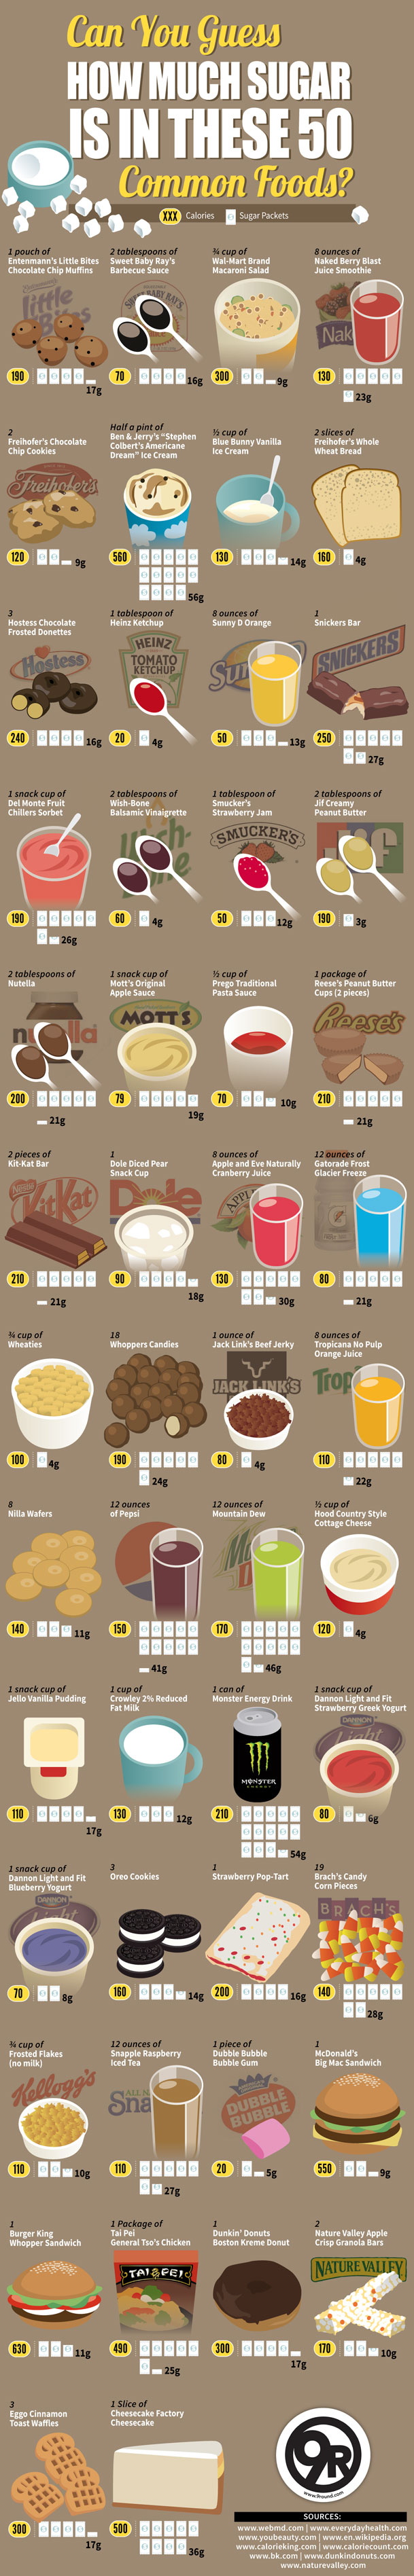 sugar-common-foods